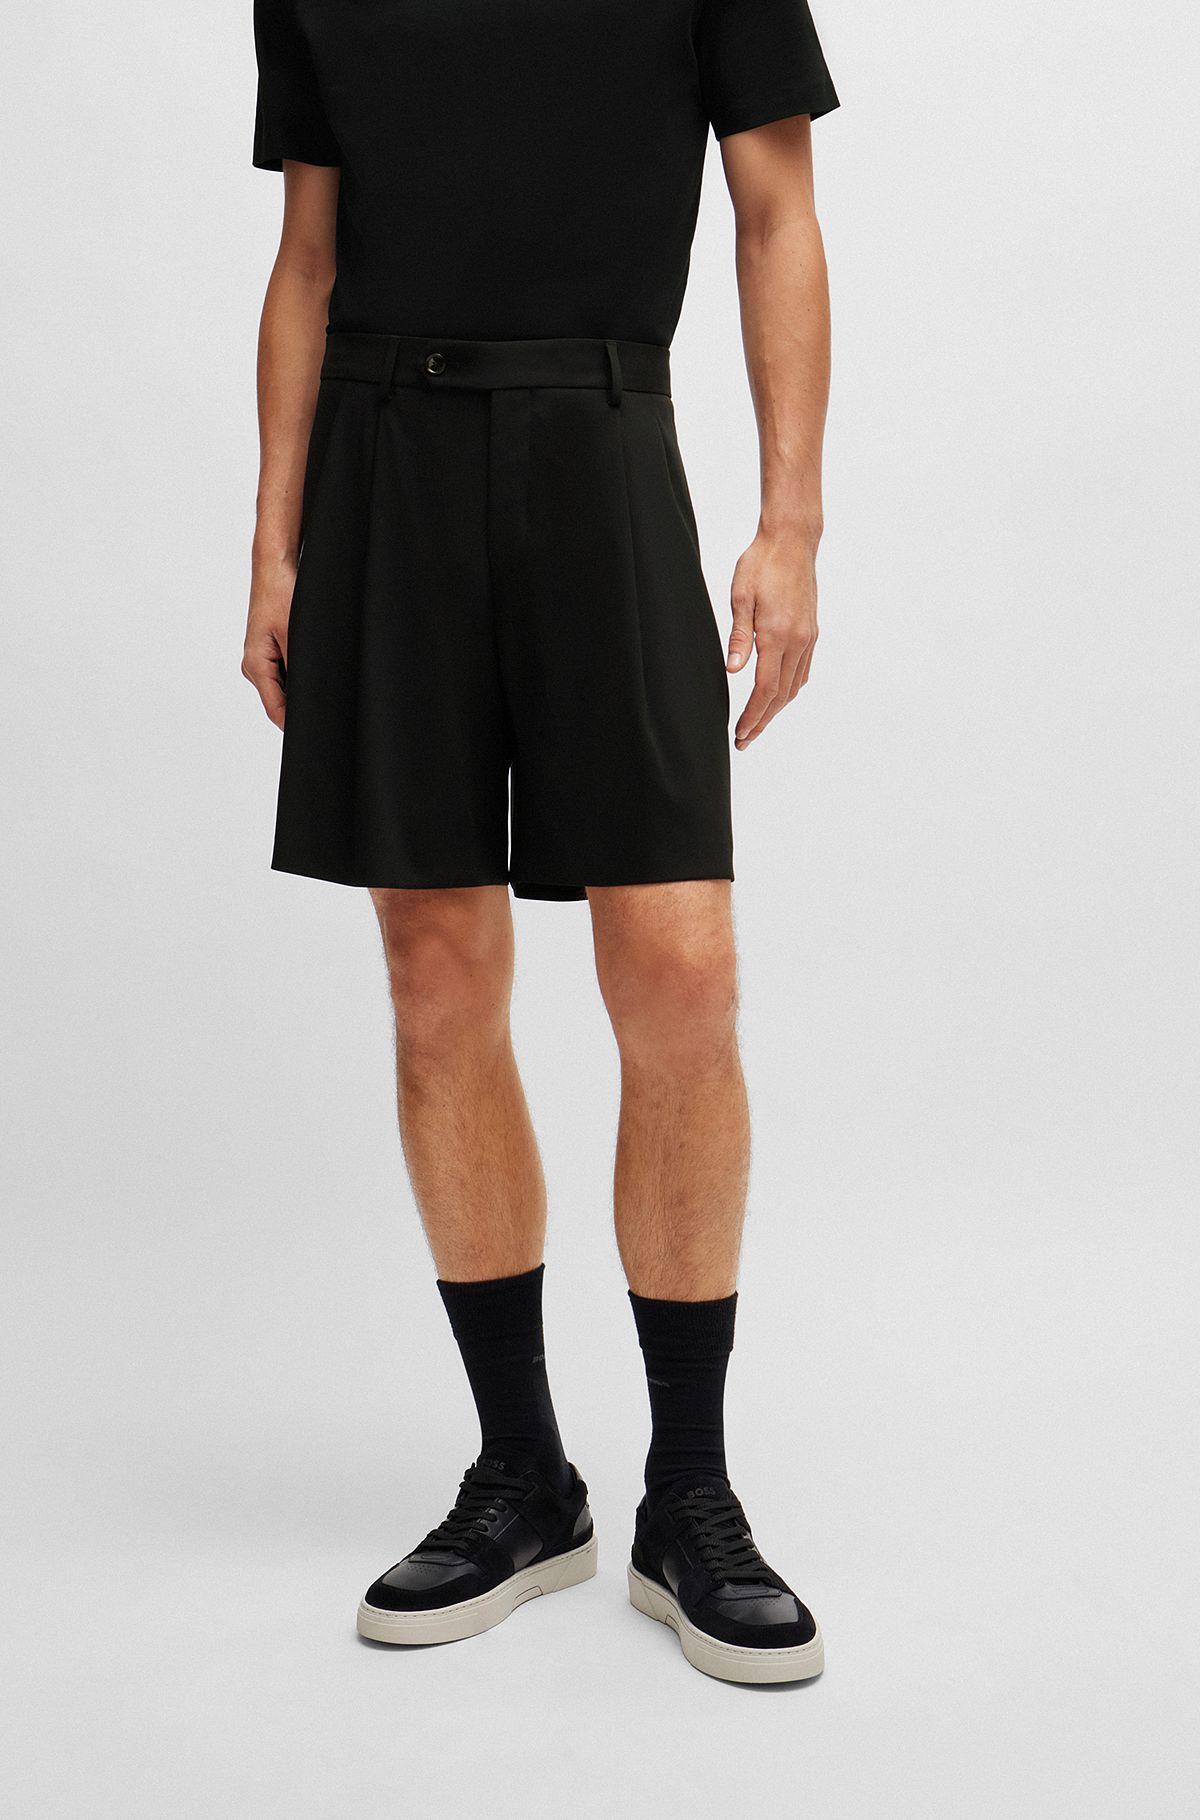 Shorts in Black by HUGO BOSS